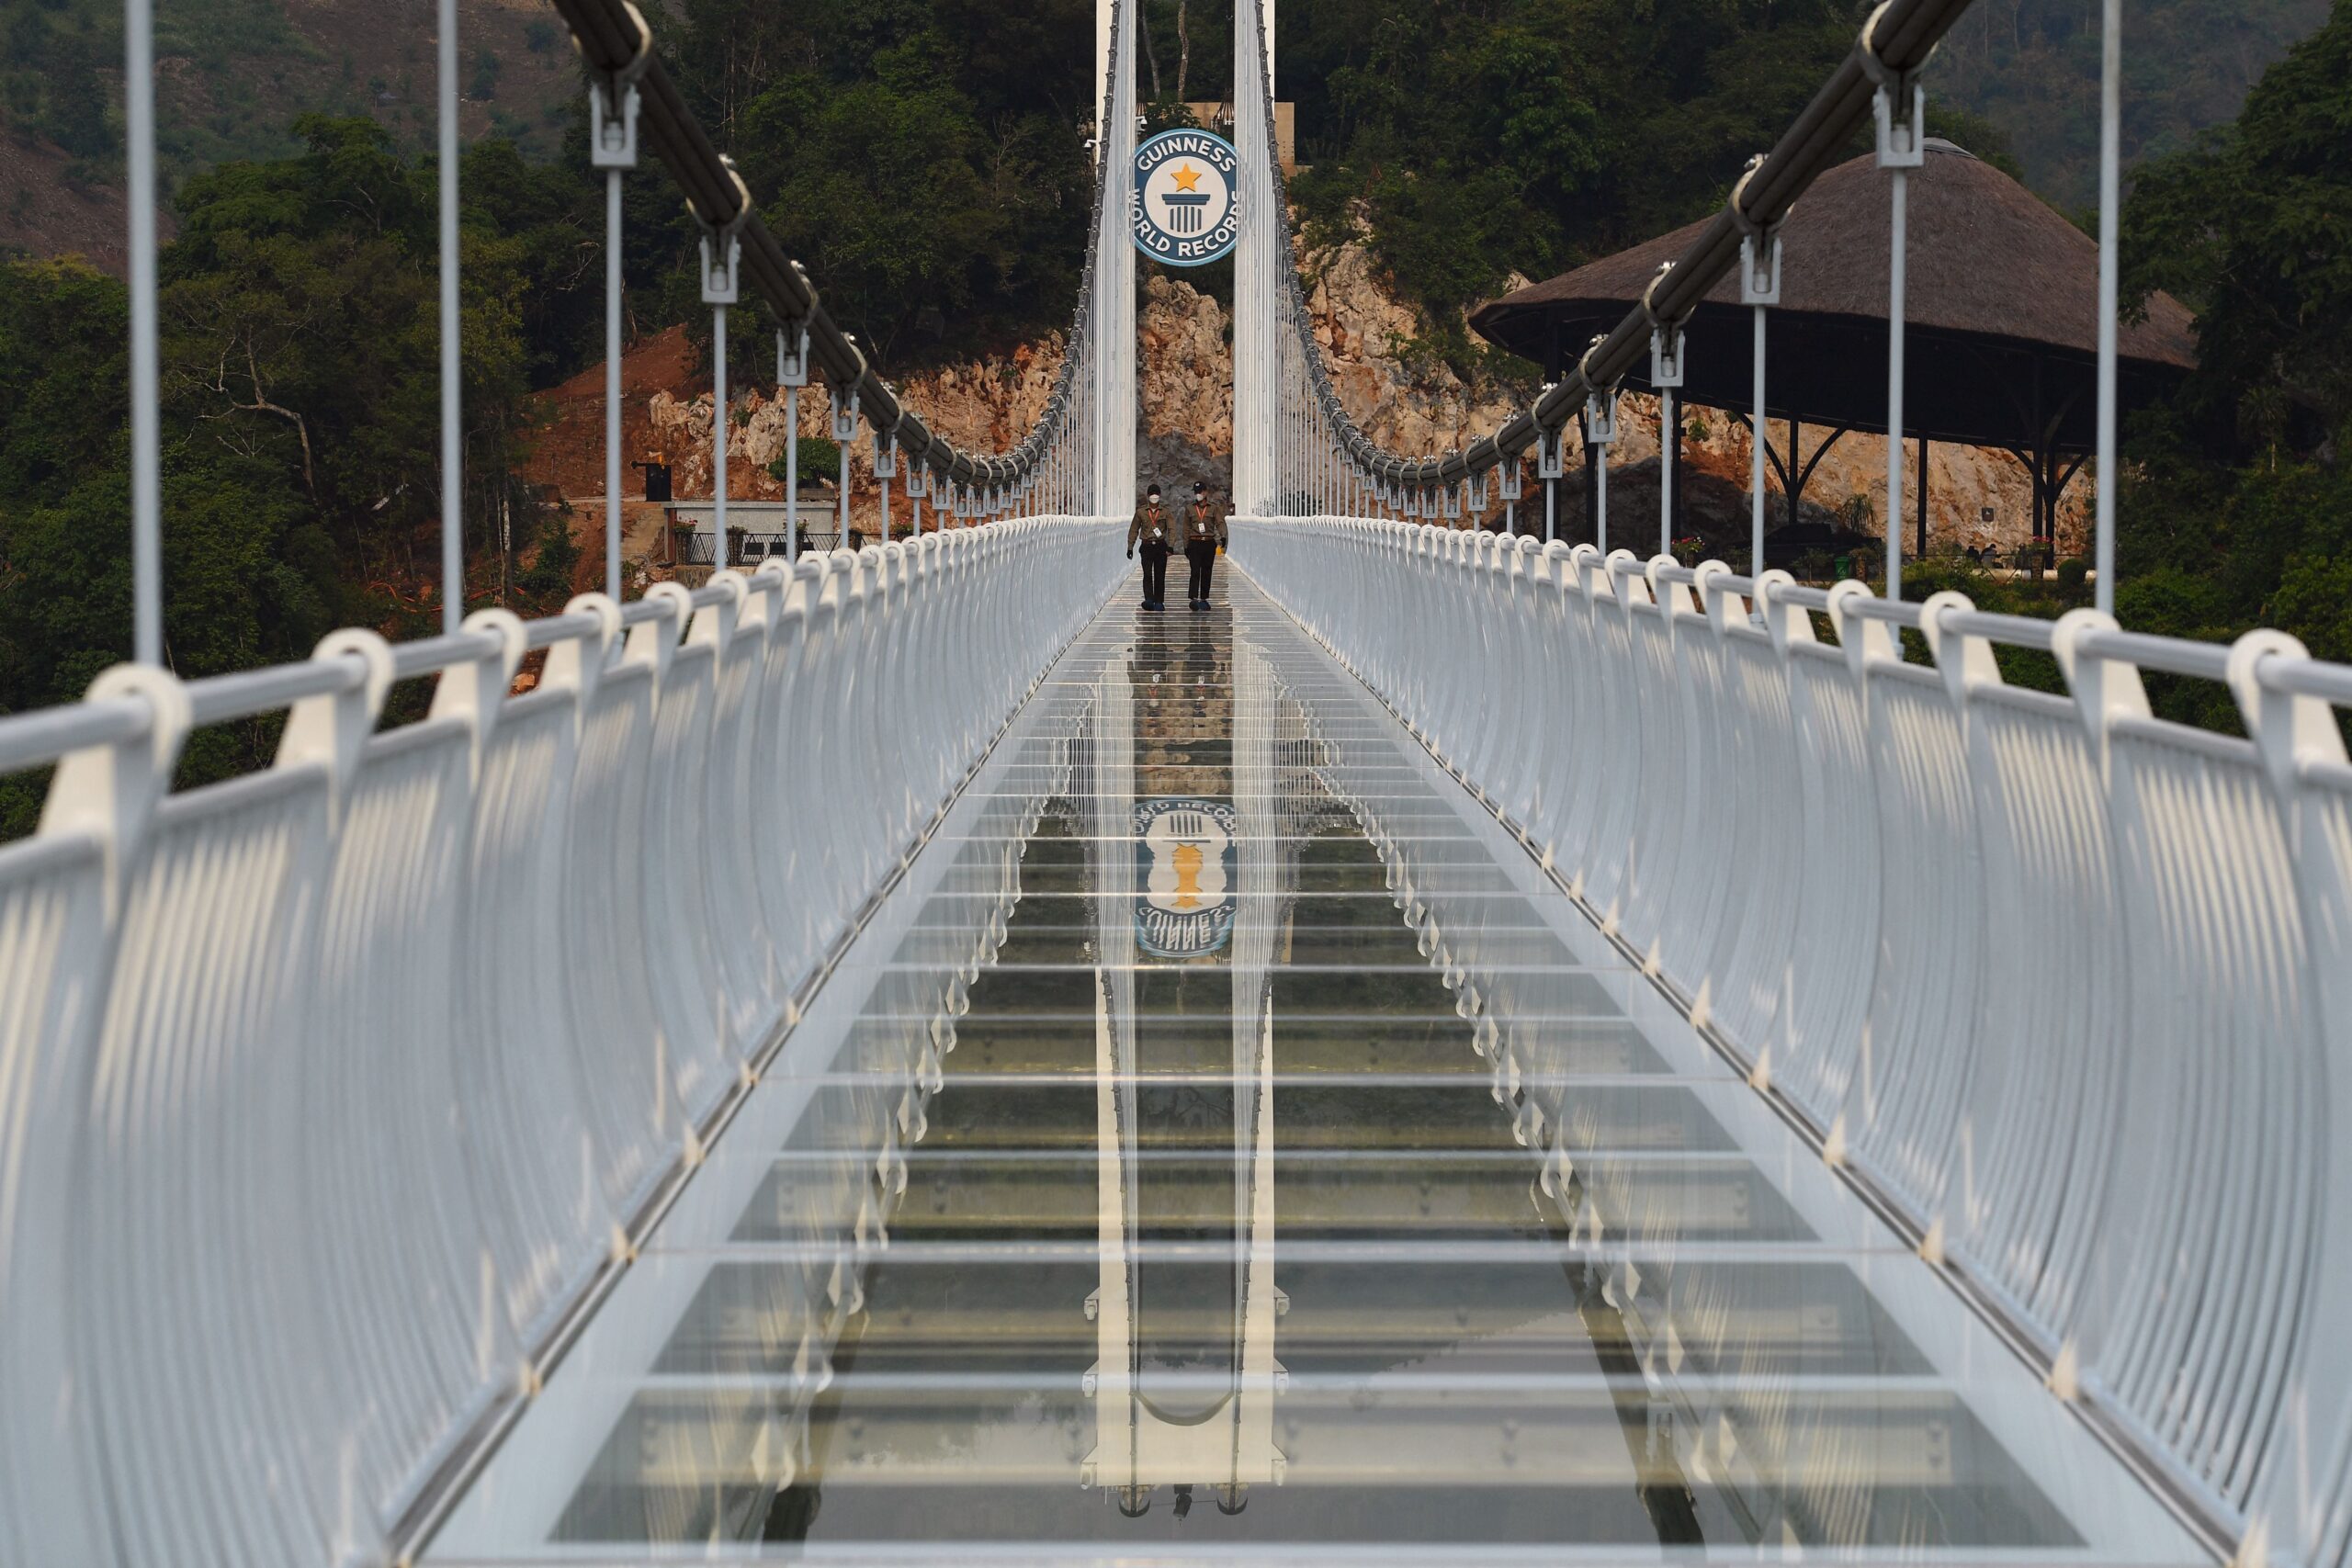 the Bach Long glass bridge in the Moc Chau district in Vietnam&#39;s Son La province